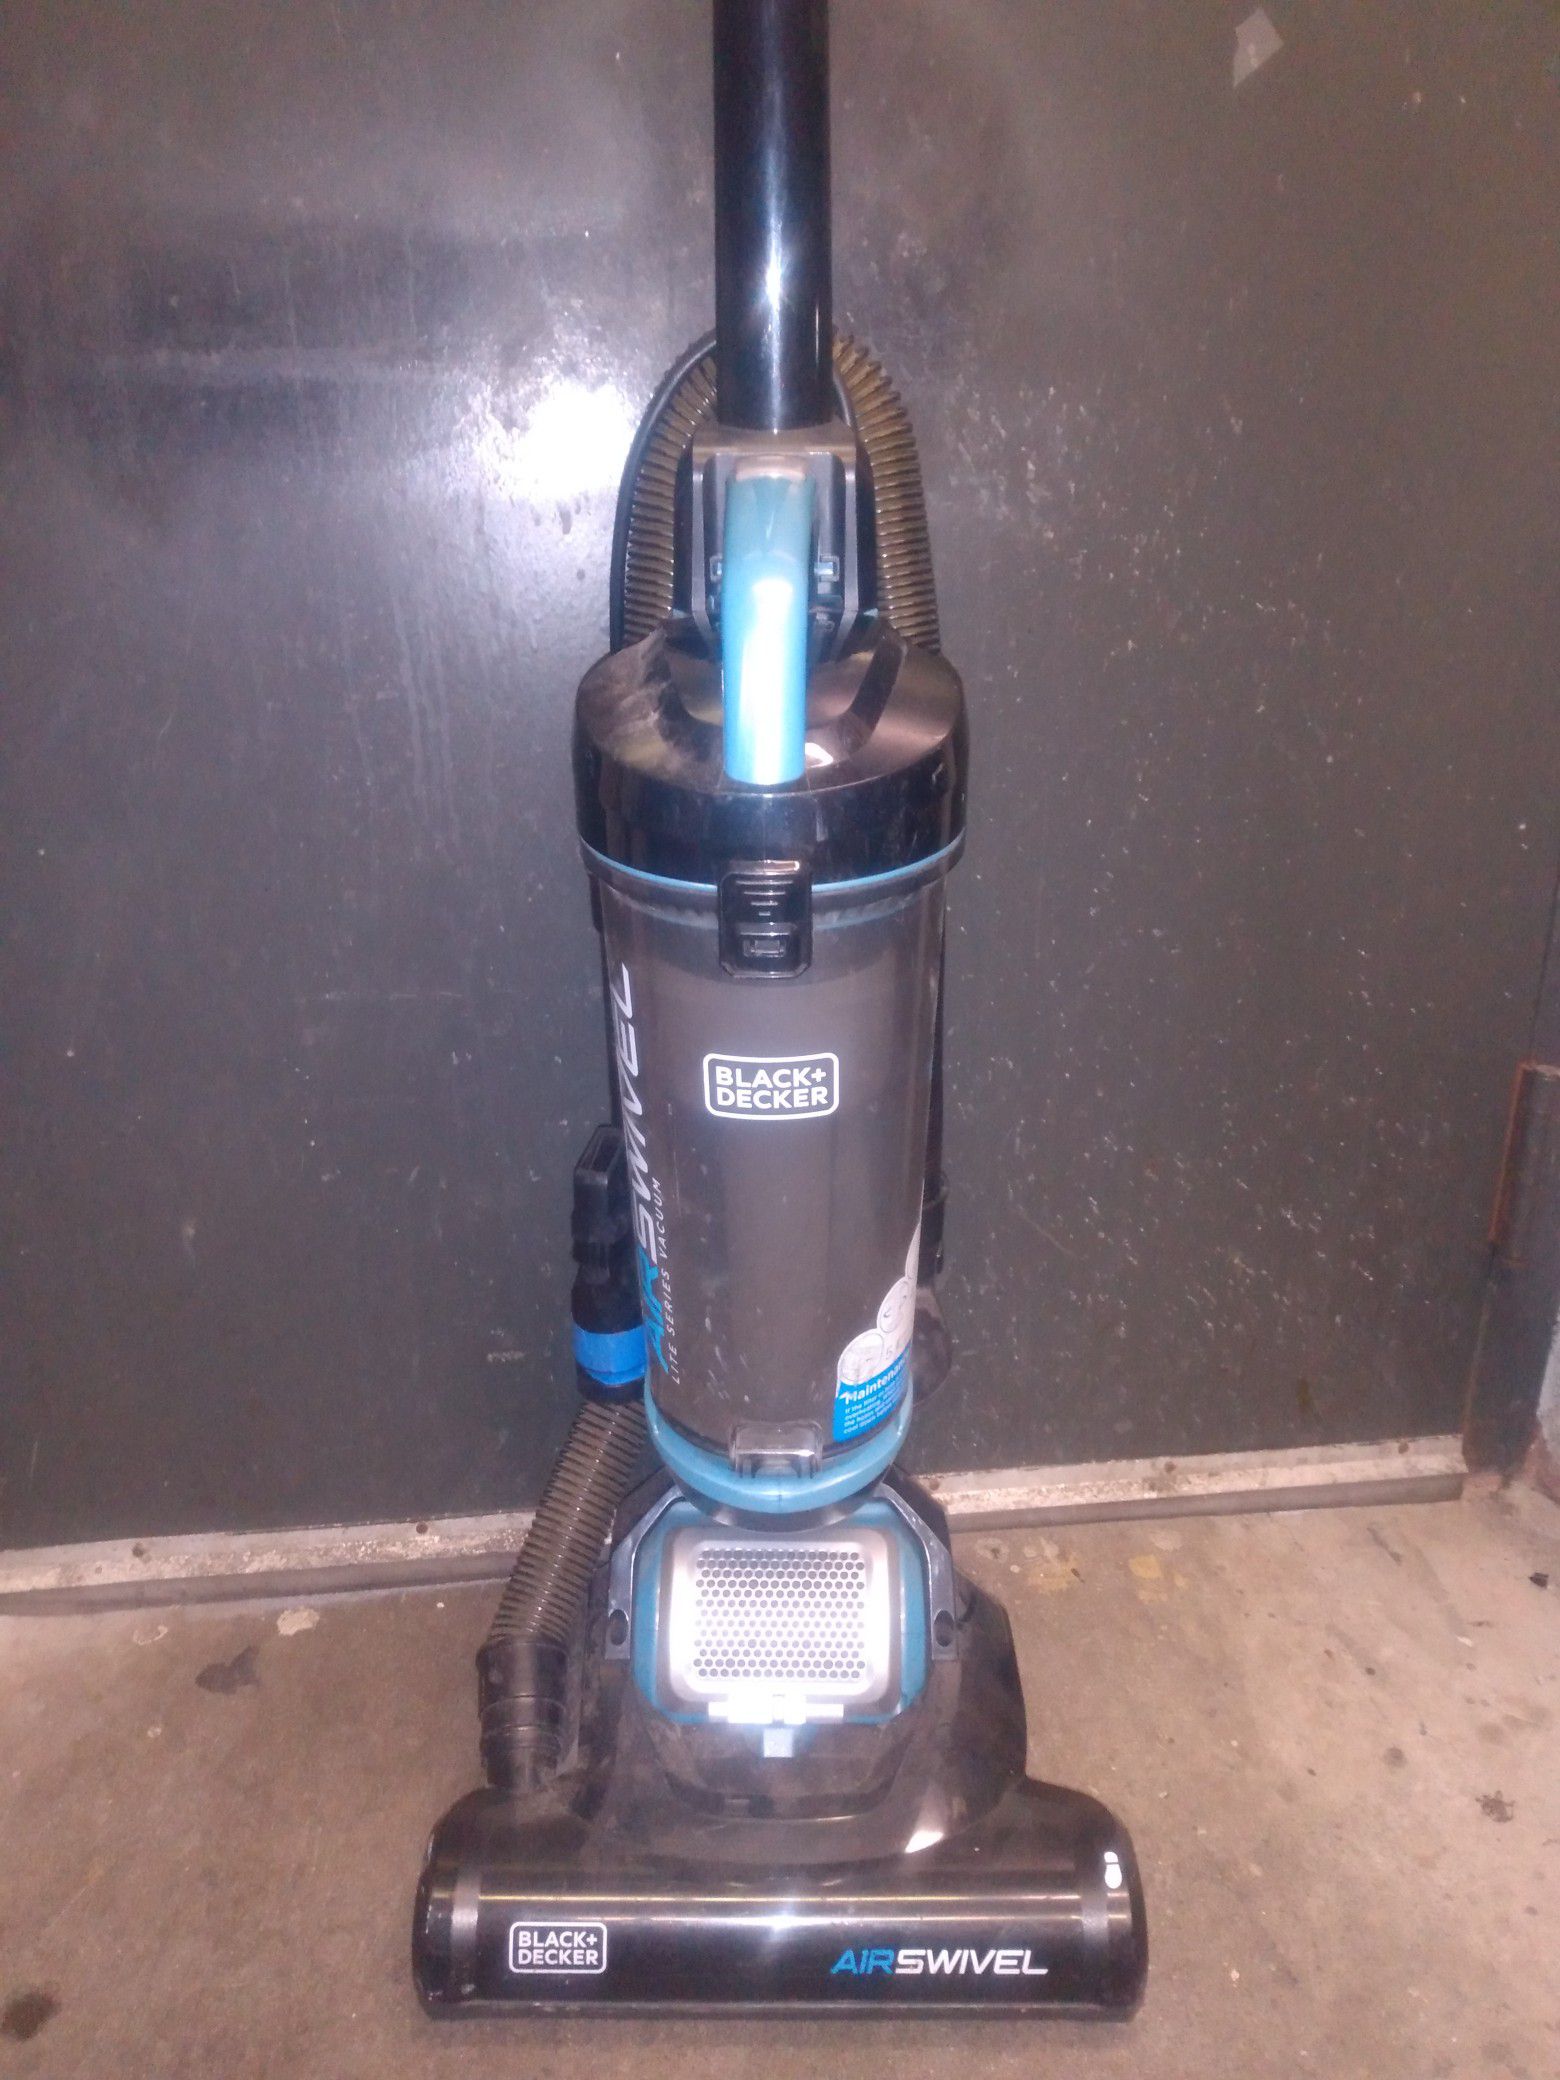 Black & Decker air swivel vacuum